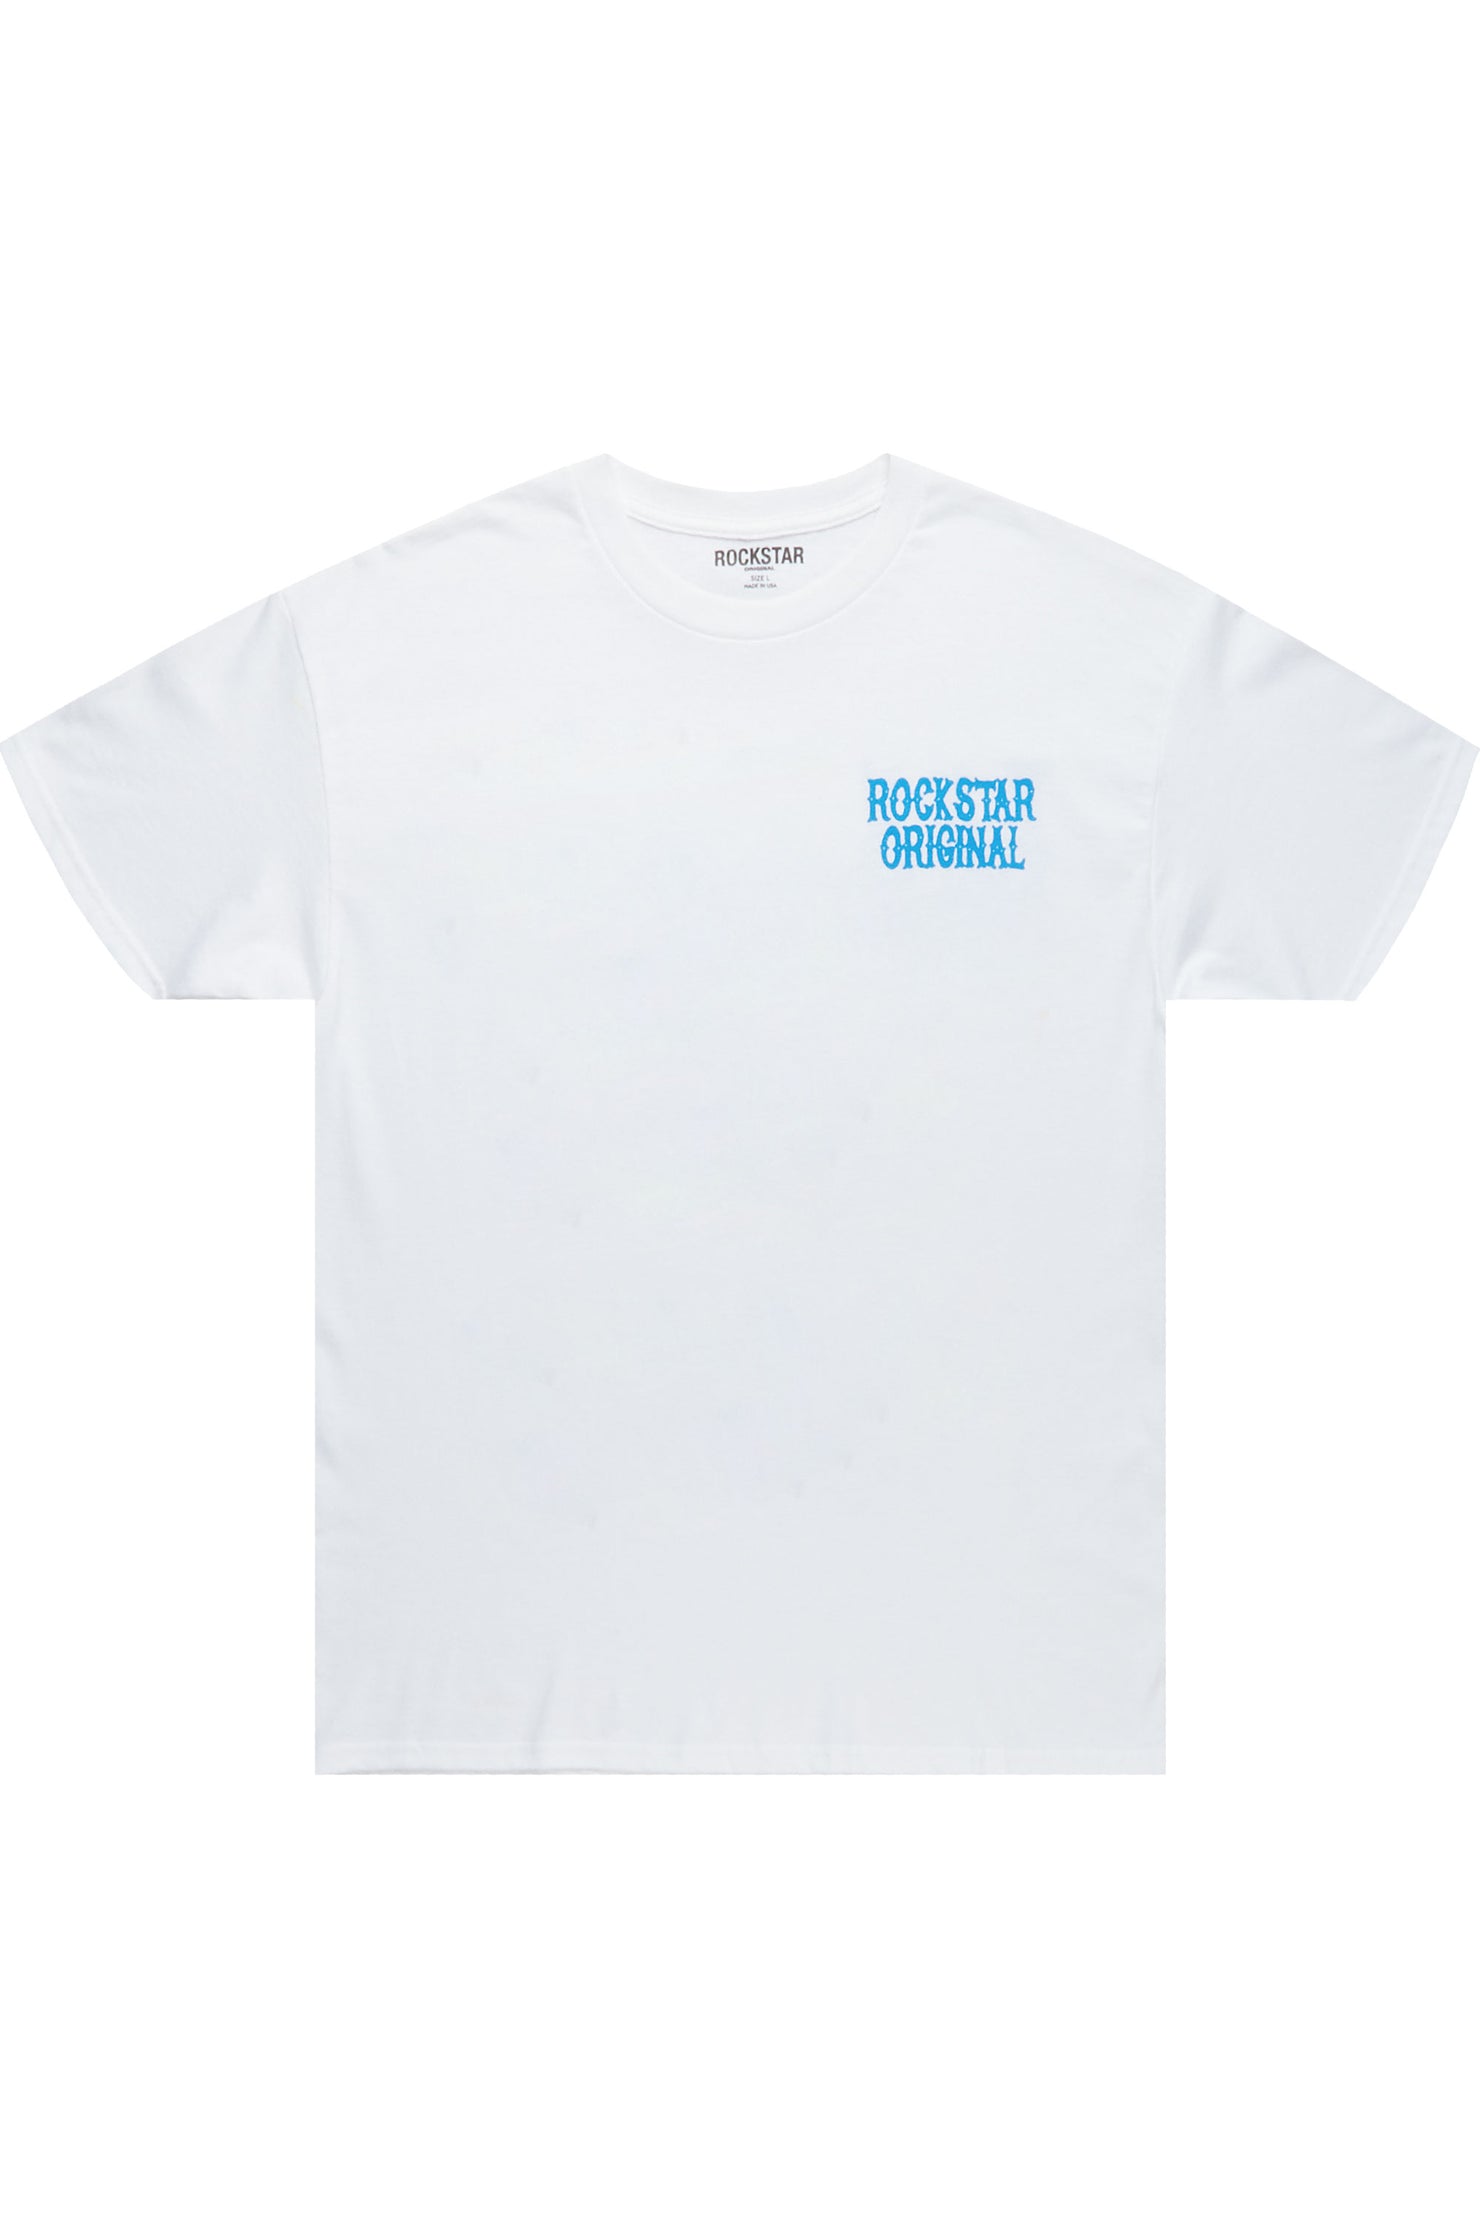 Vester White/ Blue Graphic T-Shirt